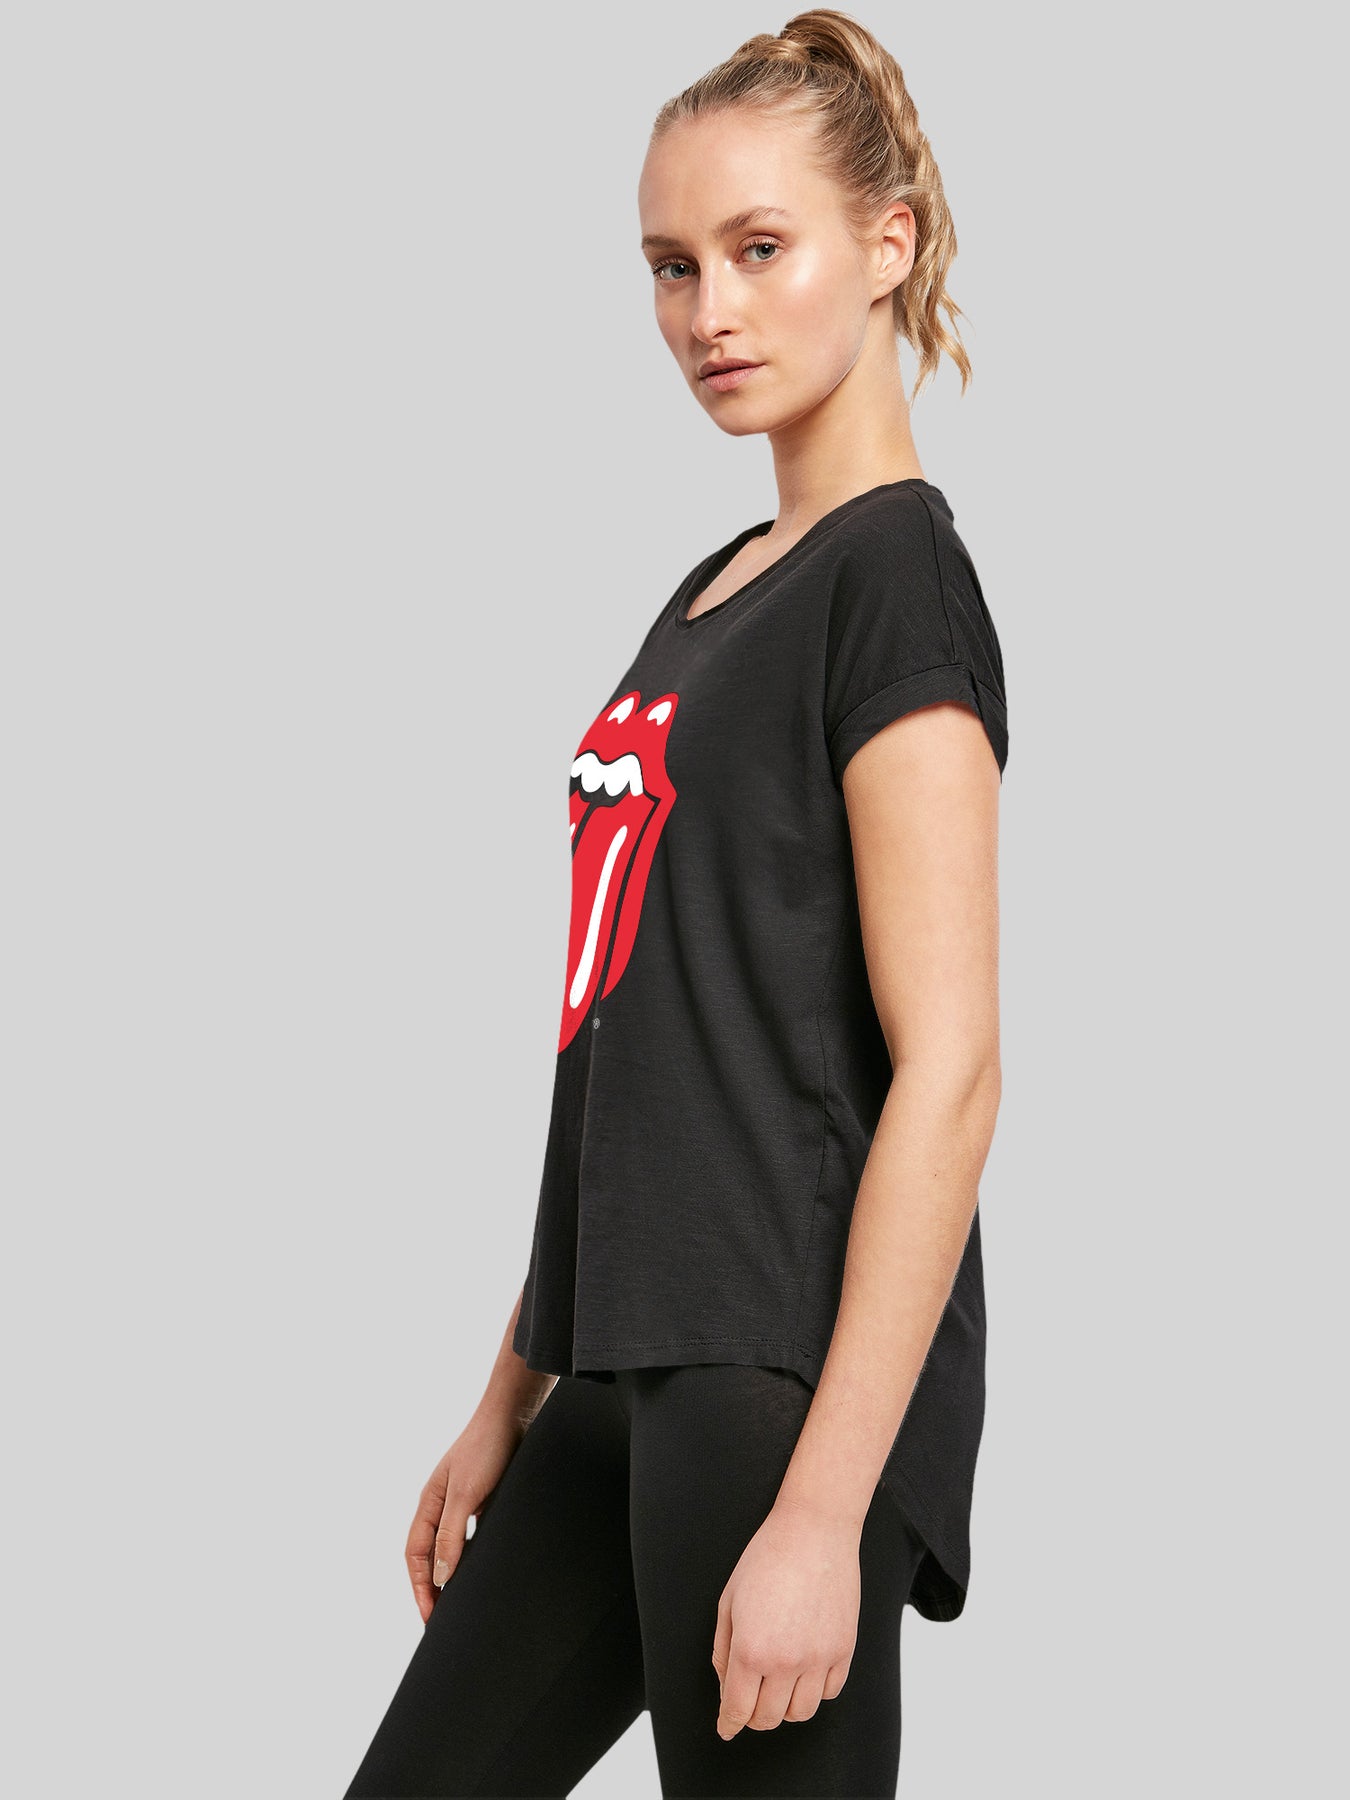 | | – F4NT4STIC T-Shirt Ladies The Tee Tongue Stones Long Classic Premium Rolling